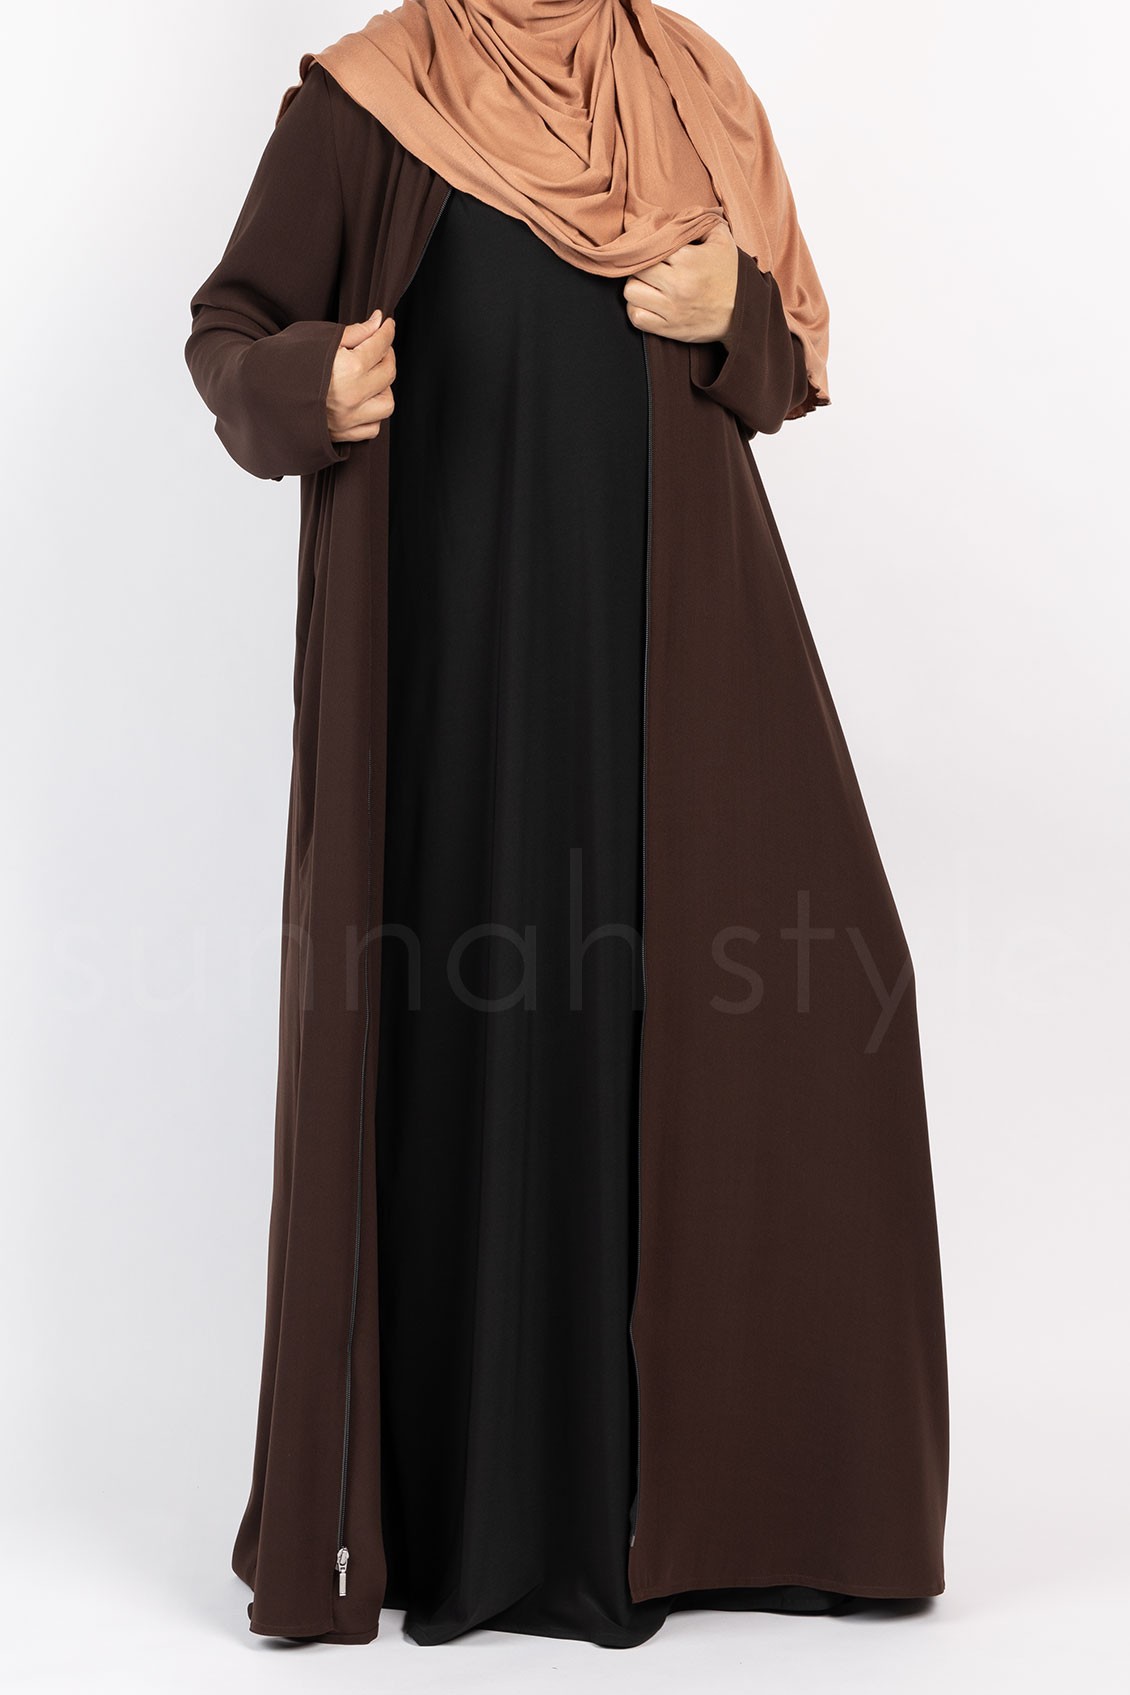 Sunnah Style Sleeveless Jersey Abaya Black